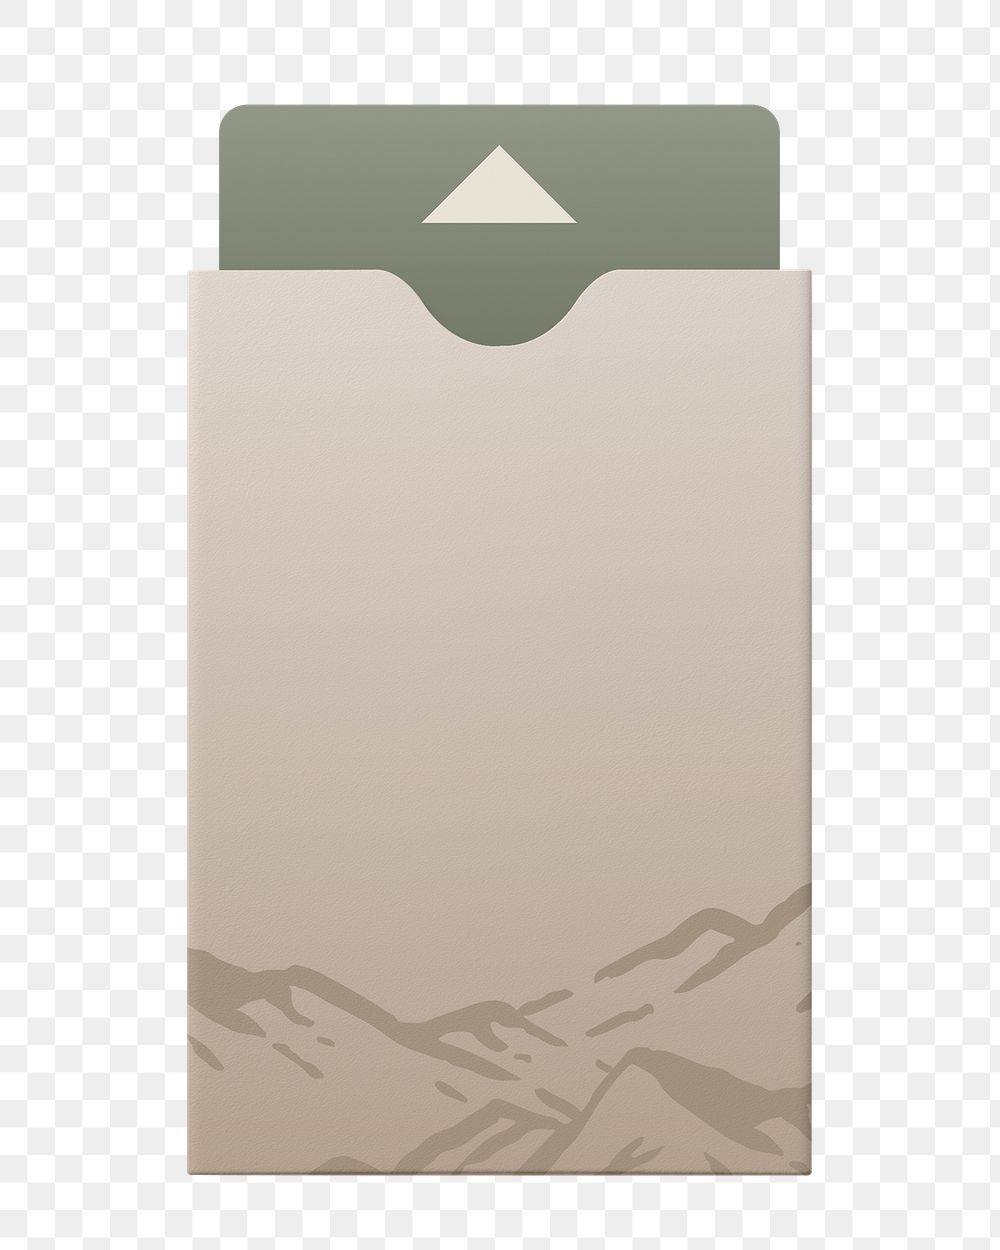 Png hotel key card, transparent background